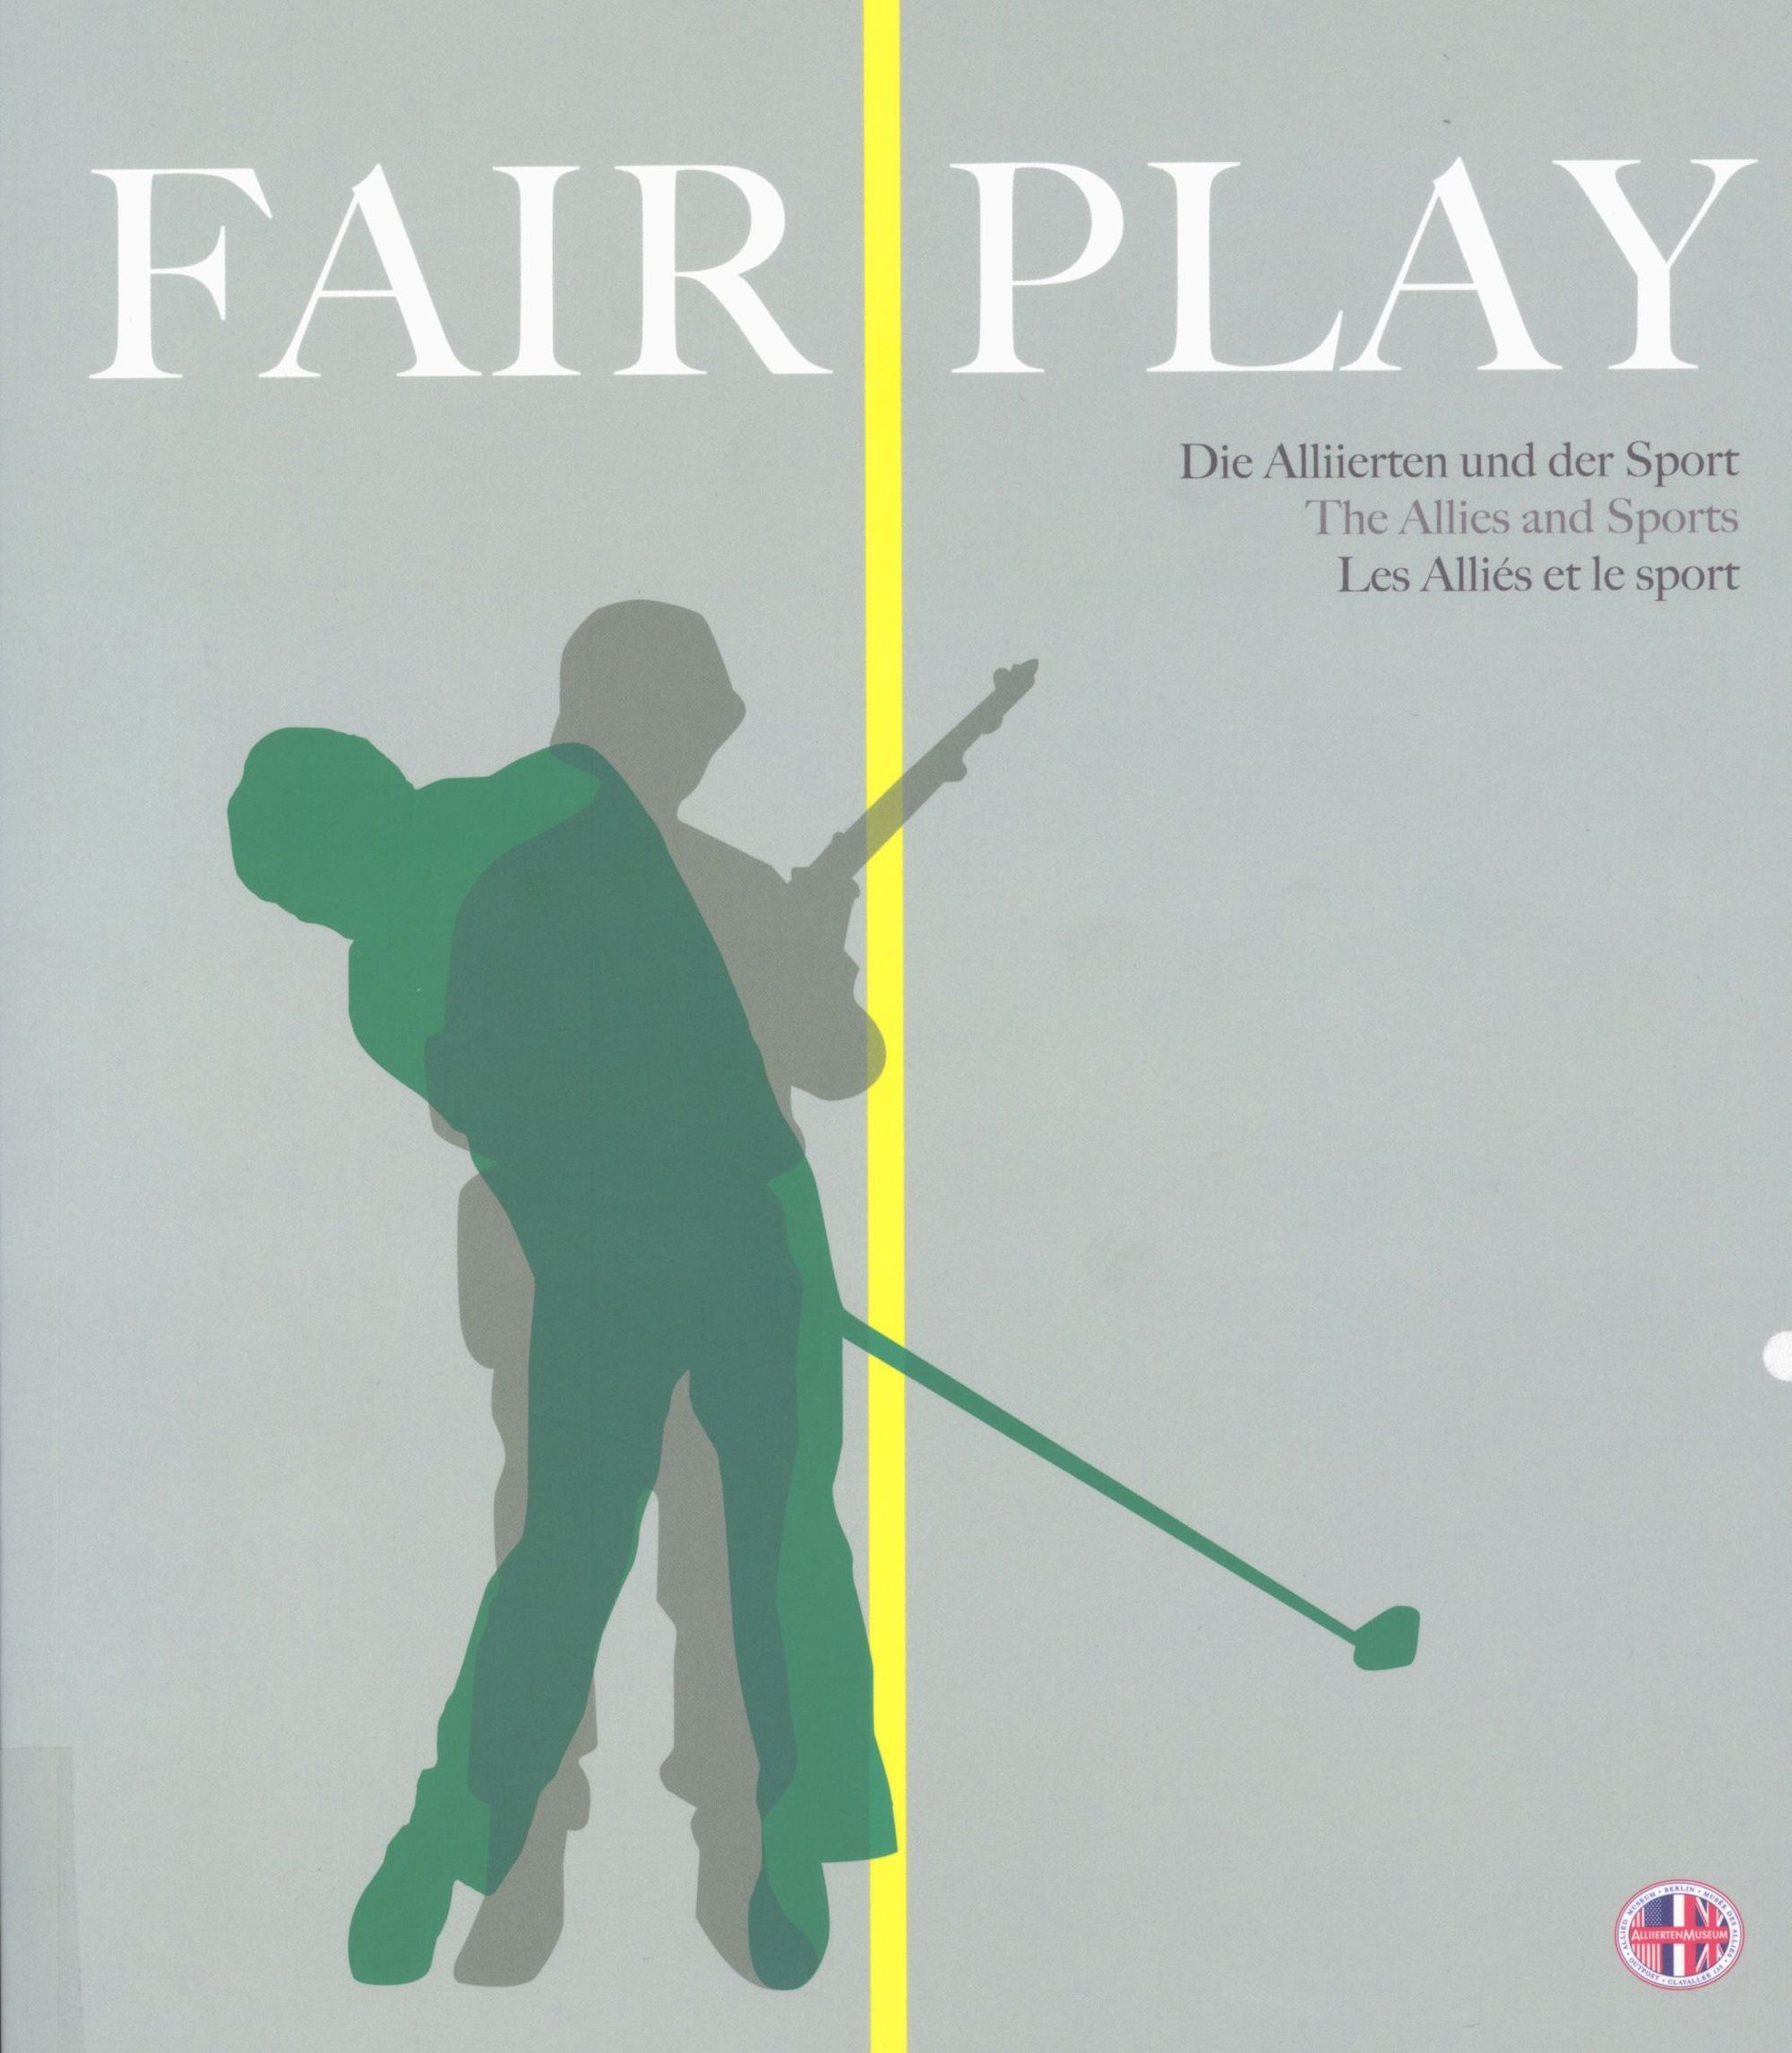 Fair Play. The Allies and Sports